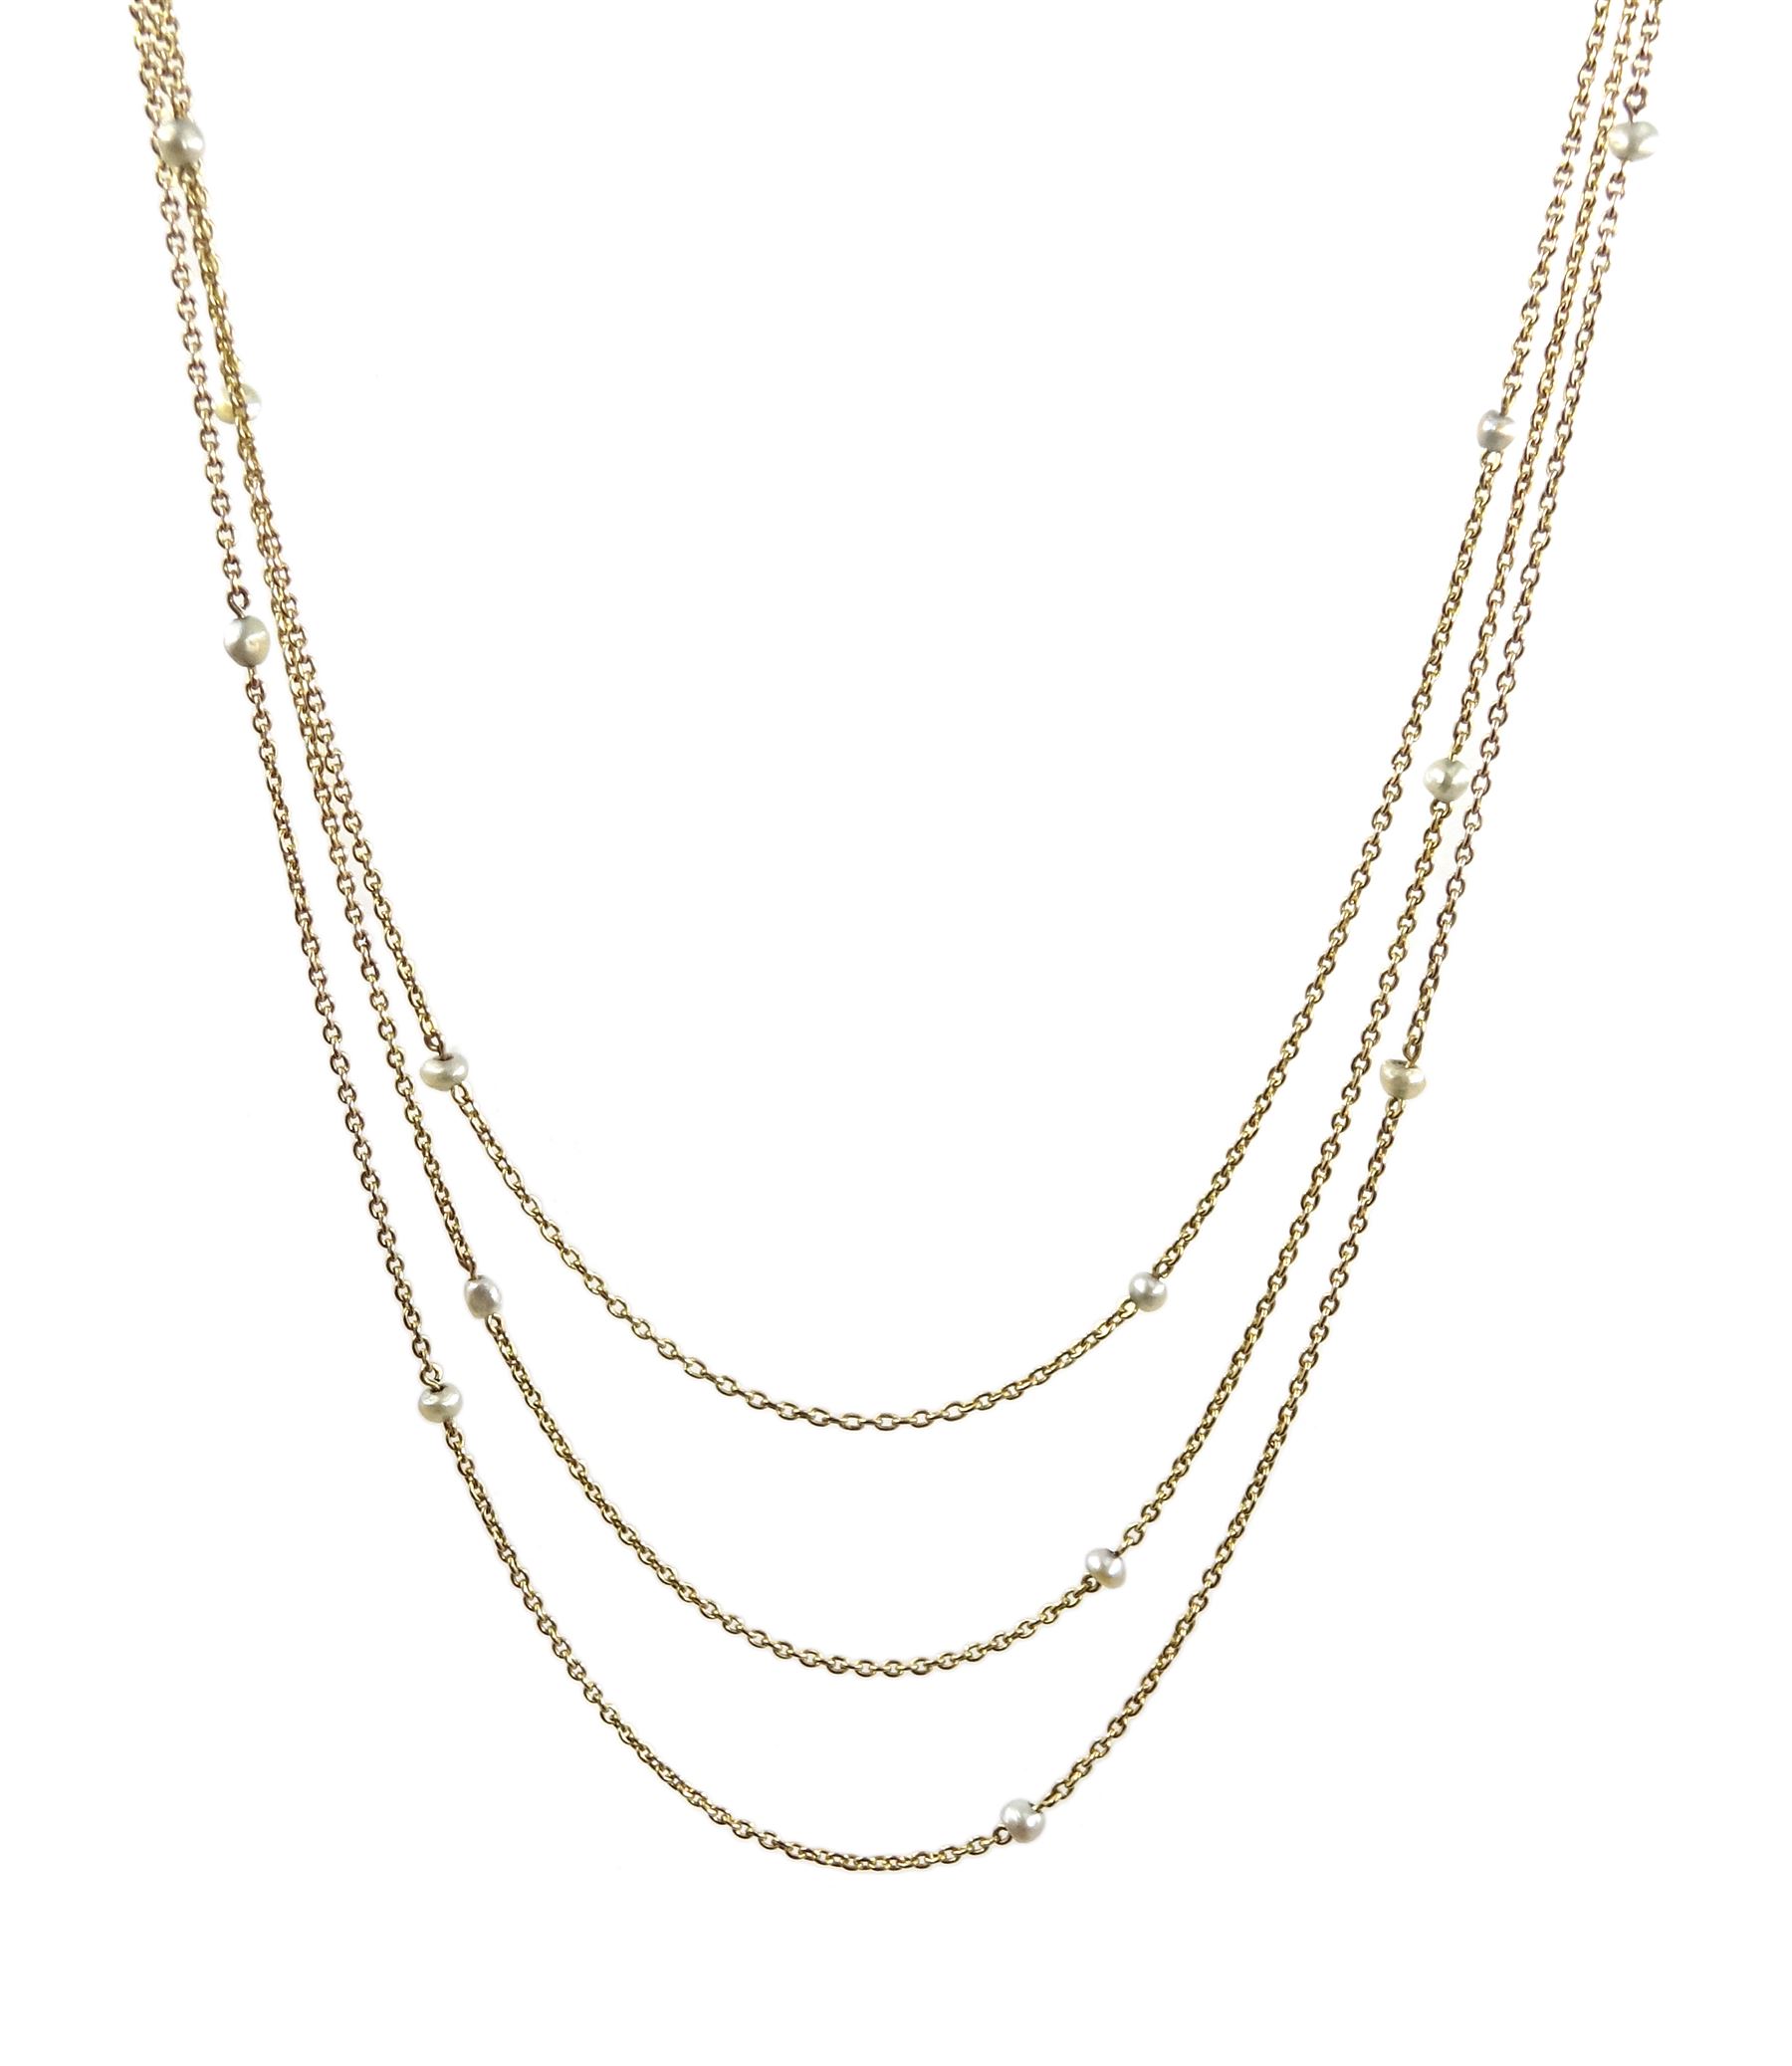 Long 16ct gold chain set with twenty light grey pearls